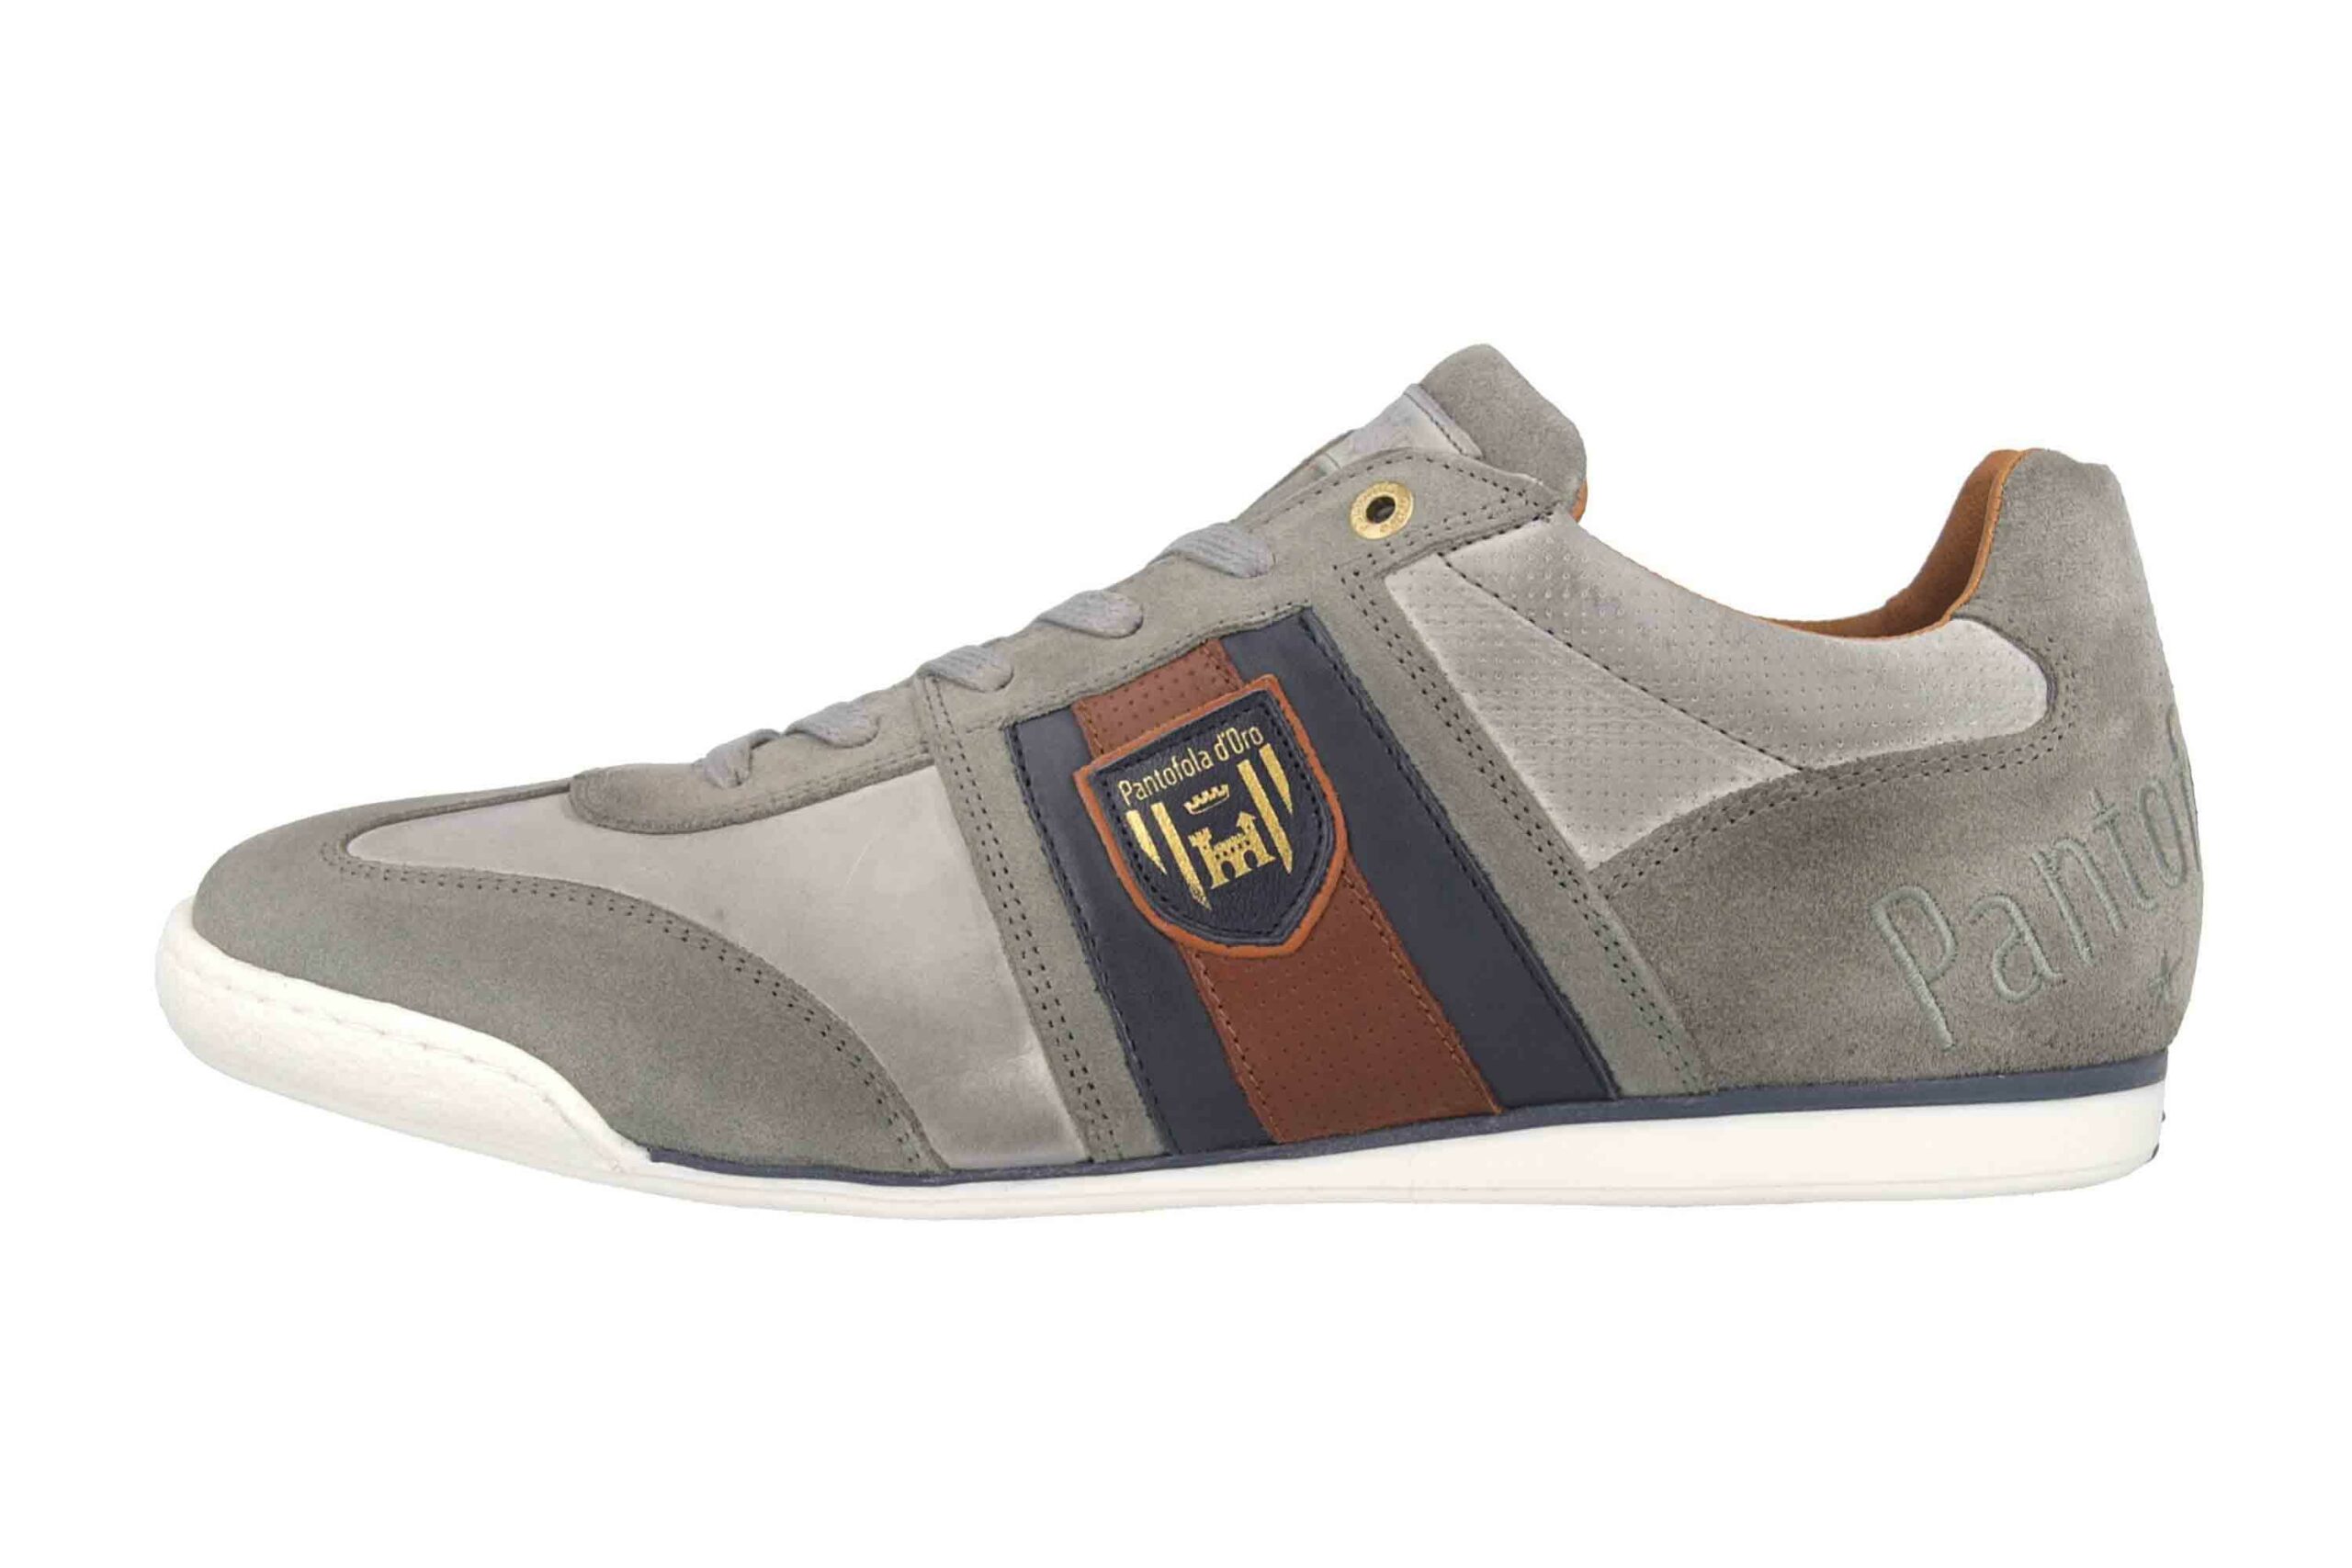 Pantofola d'Oro Imola Scudo Uomo Low Sneaker in Übergrößen Grau 10193040.3JW/10193084.3JW große Herrenschuhe